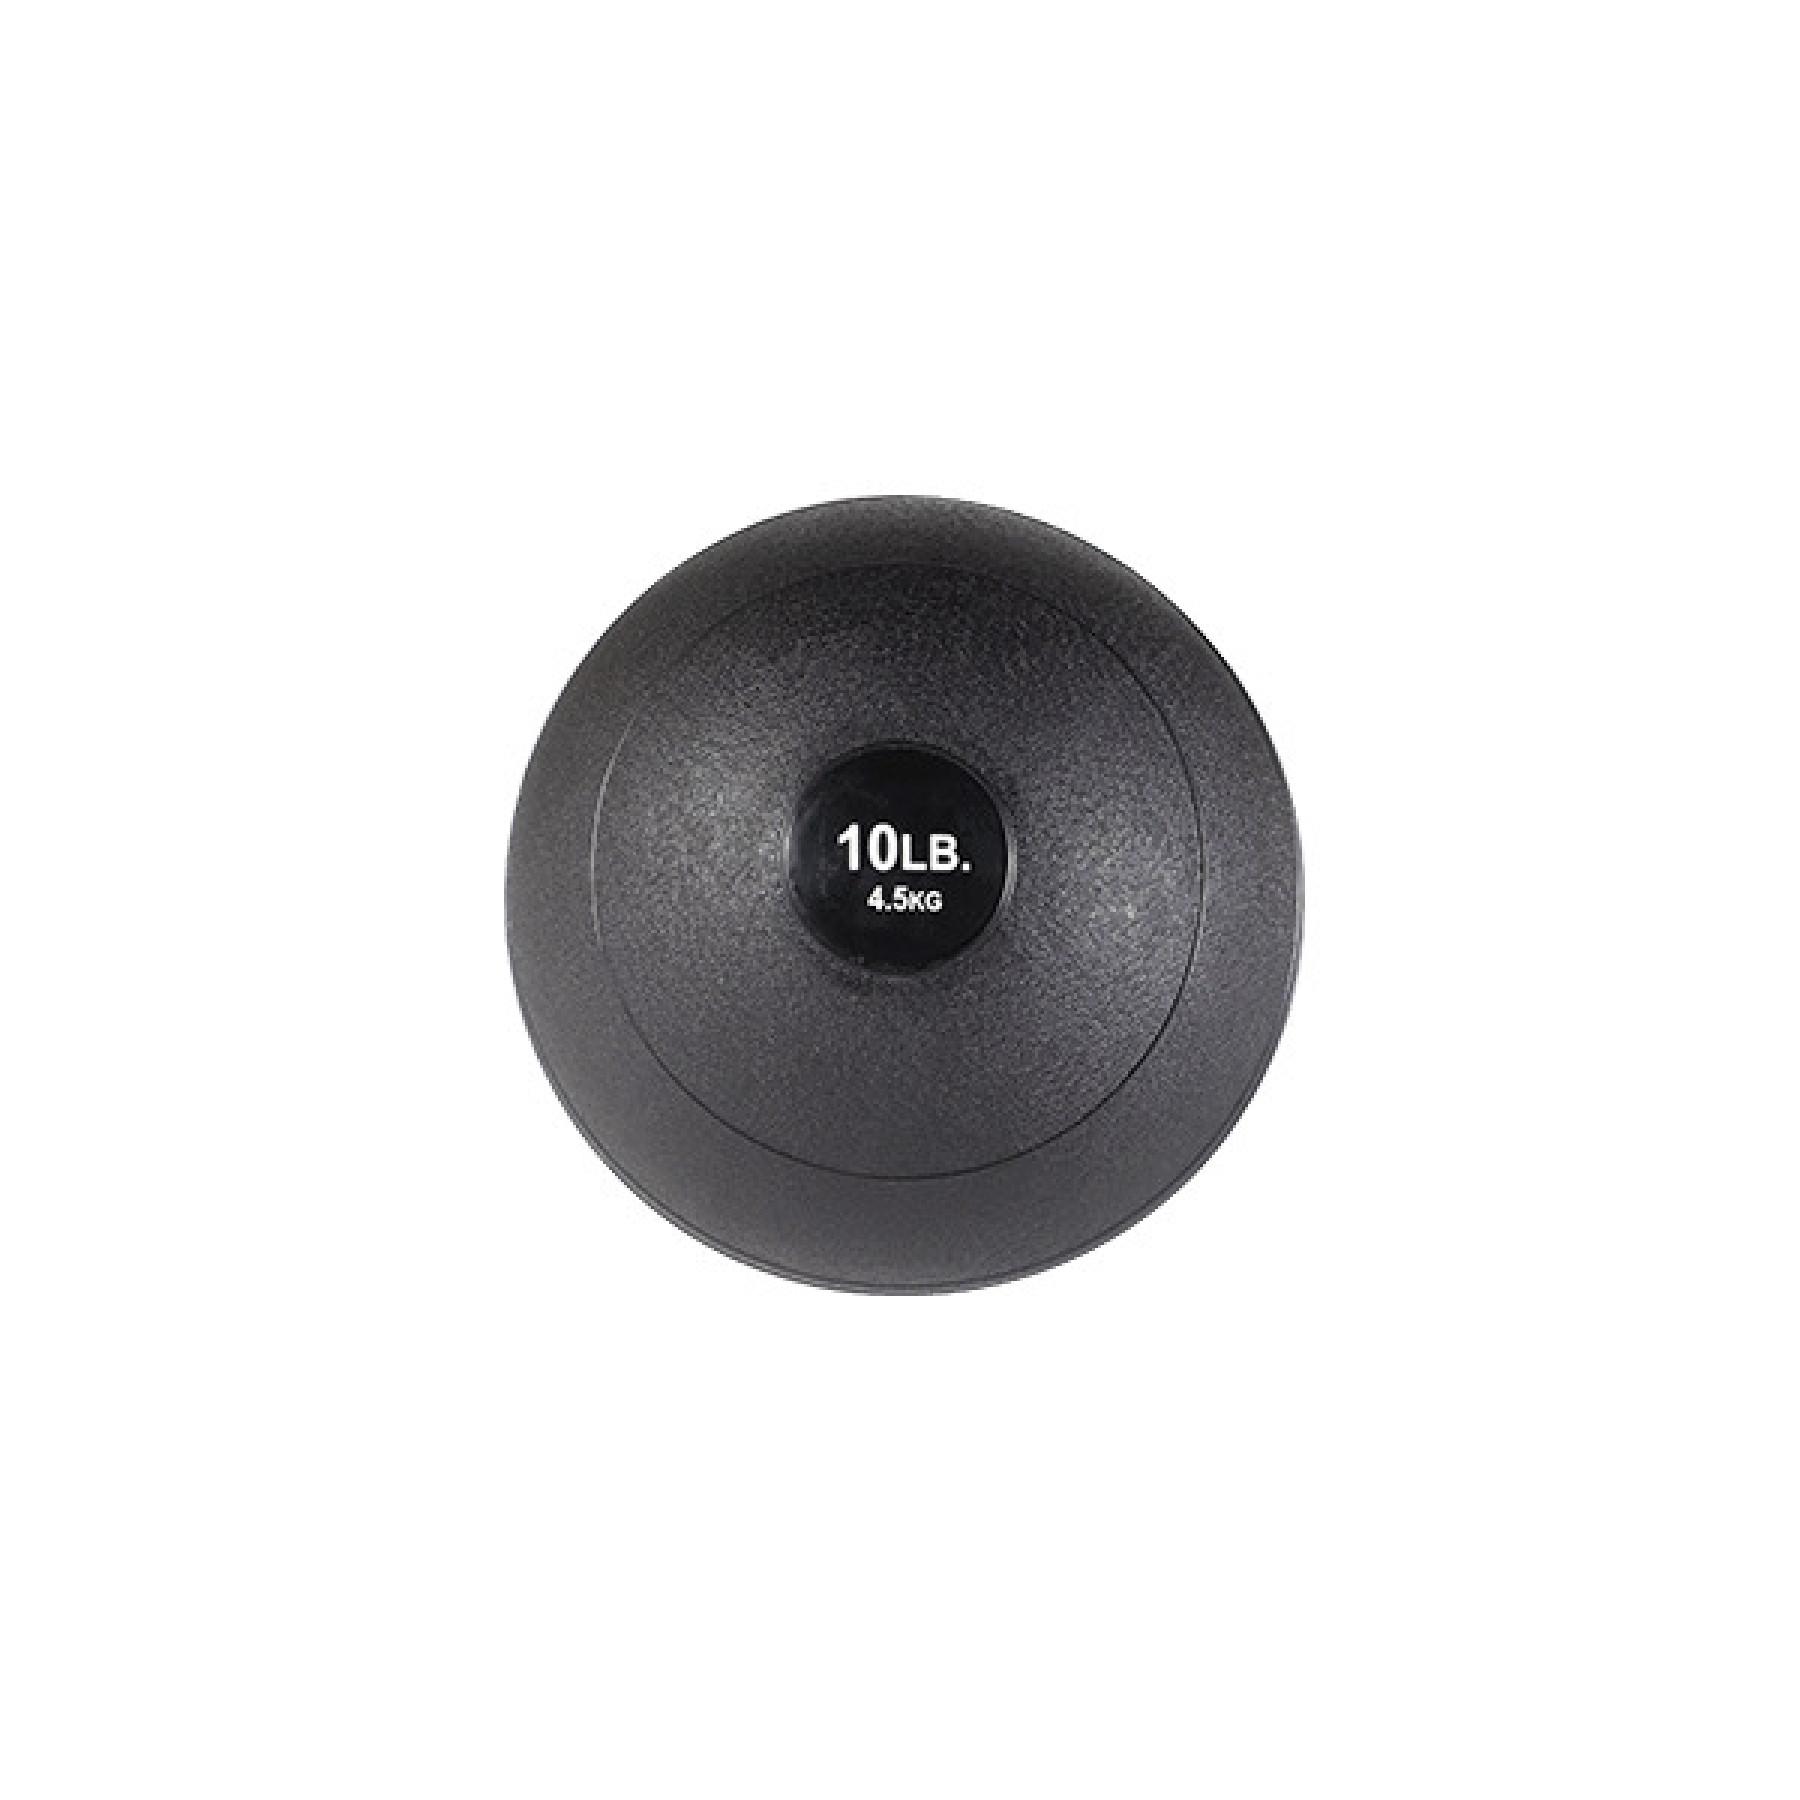 Slam ball 20 lb - 9,7 kg Body Solid